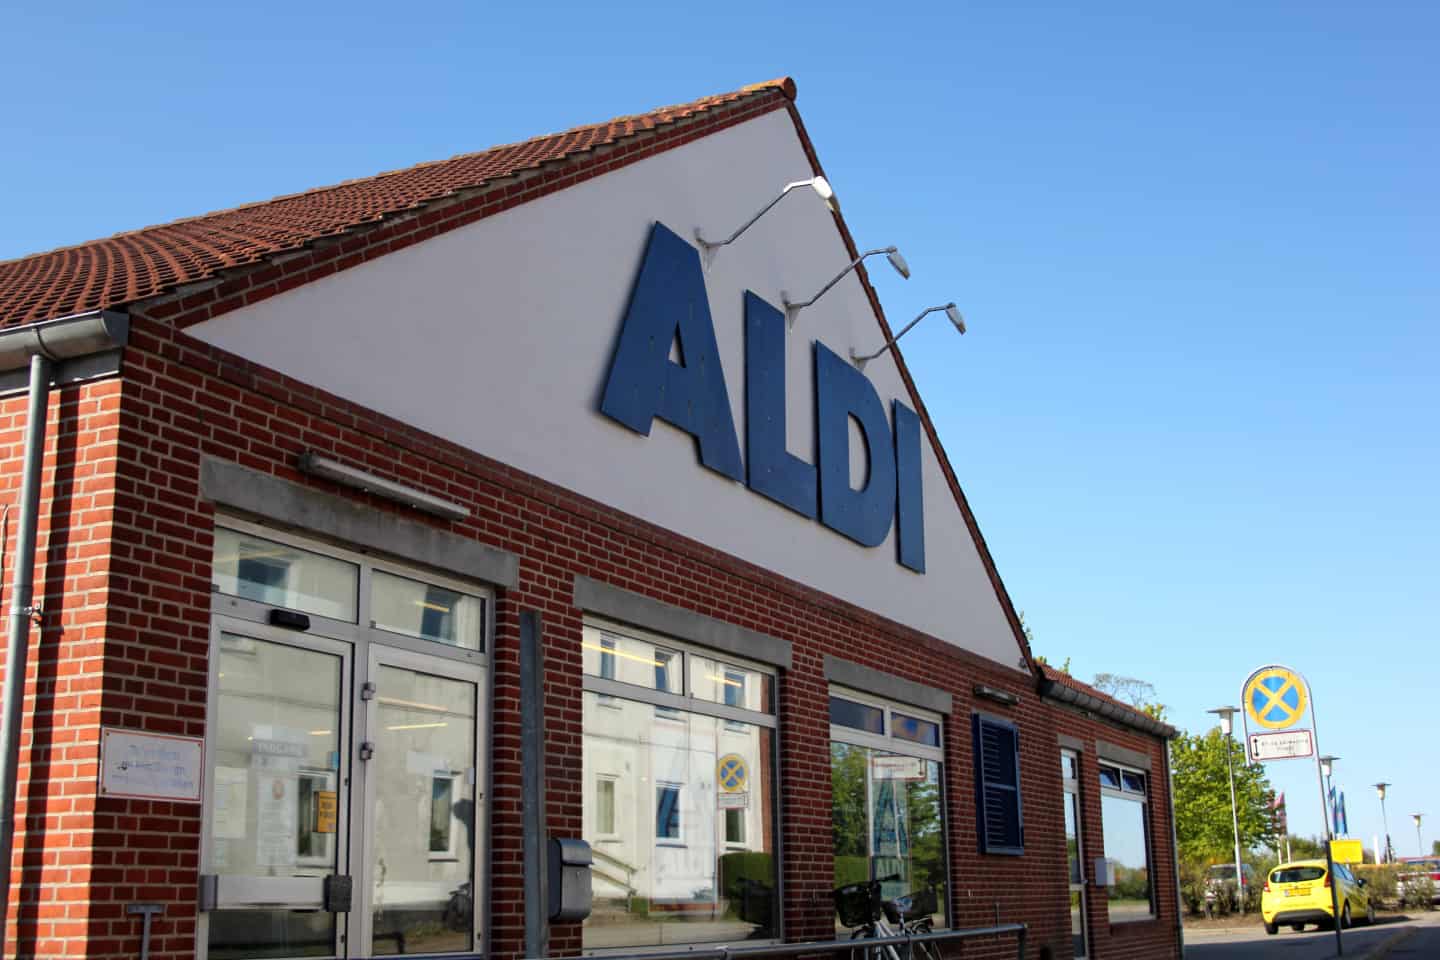 Her lukker Aldi sine butikker |